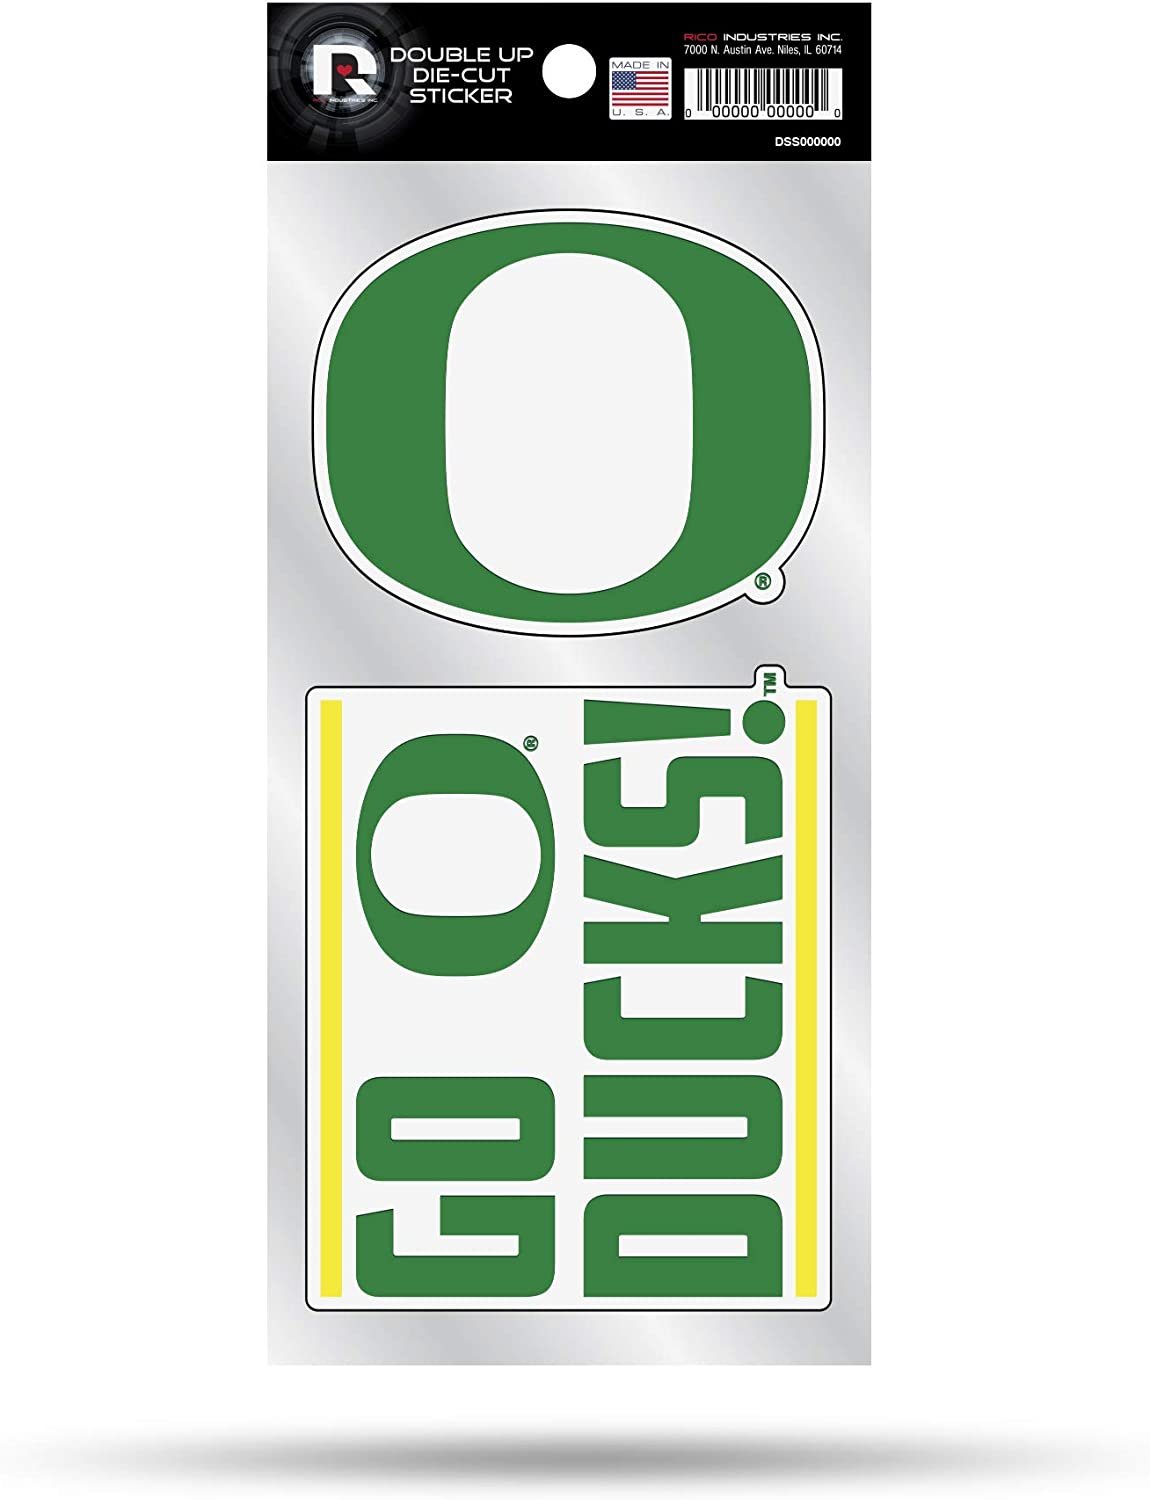 University of Oregon Ducks Double Up Die Cut Sticker Decal Sheet, 4x8 Inch